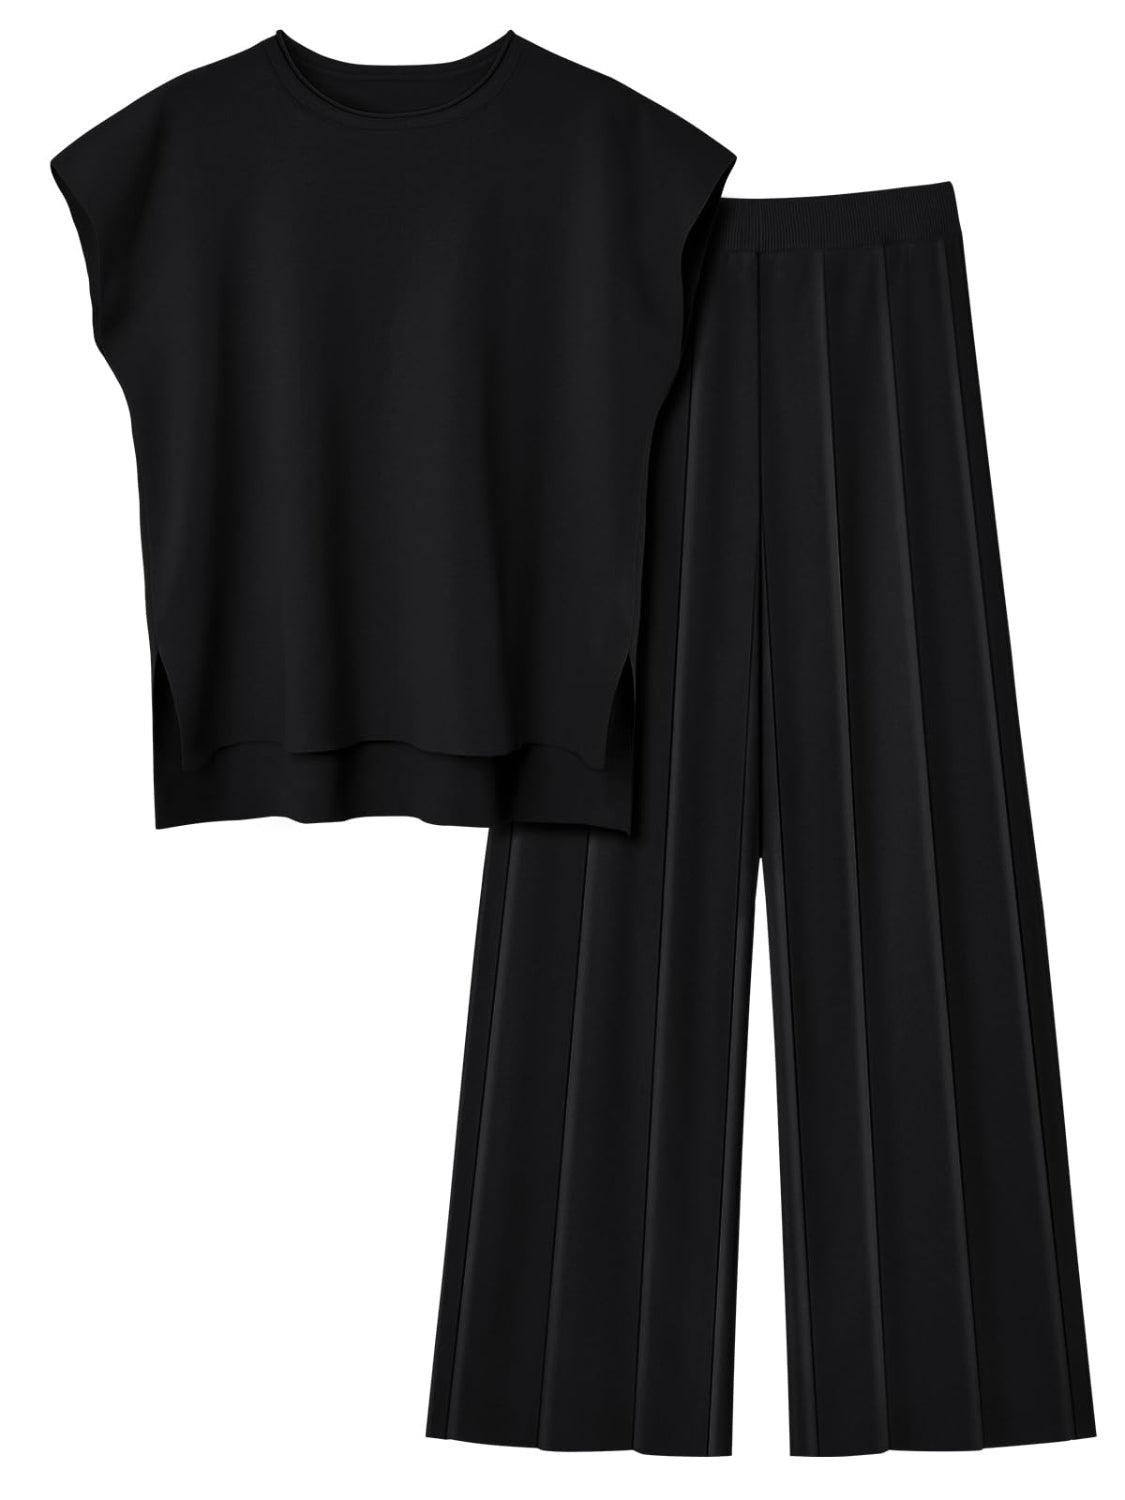 Bona Fide Fashion - Round Neck Cap Sleeve Top and Bottom Knit Set - Women Fashion - Bona Fide Fashion